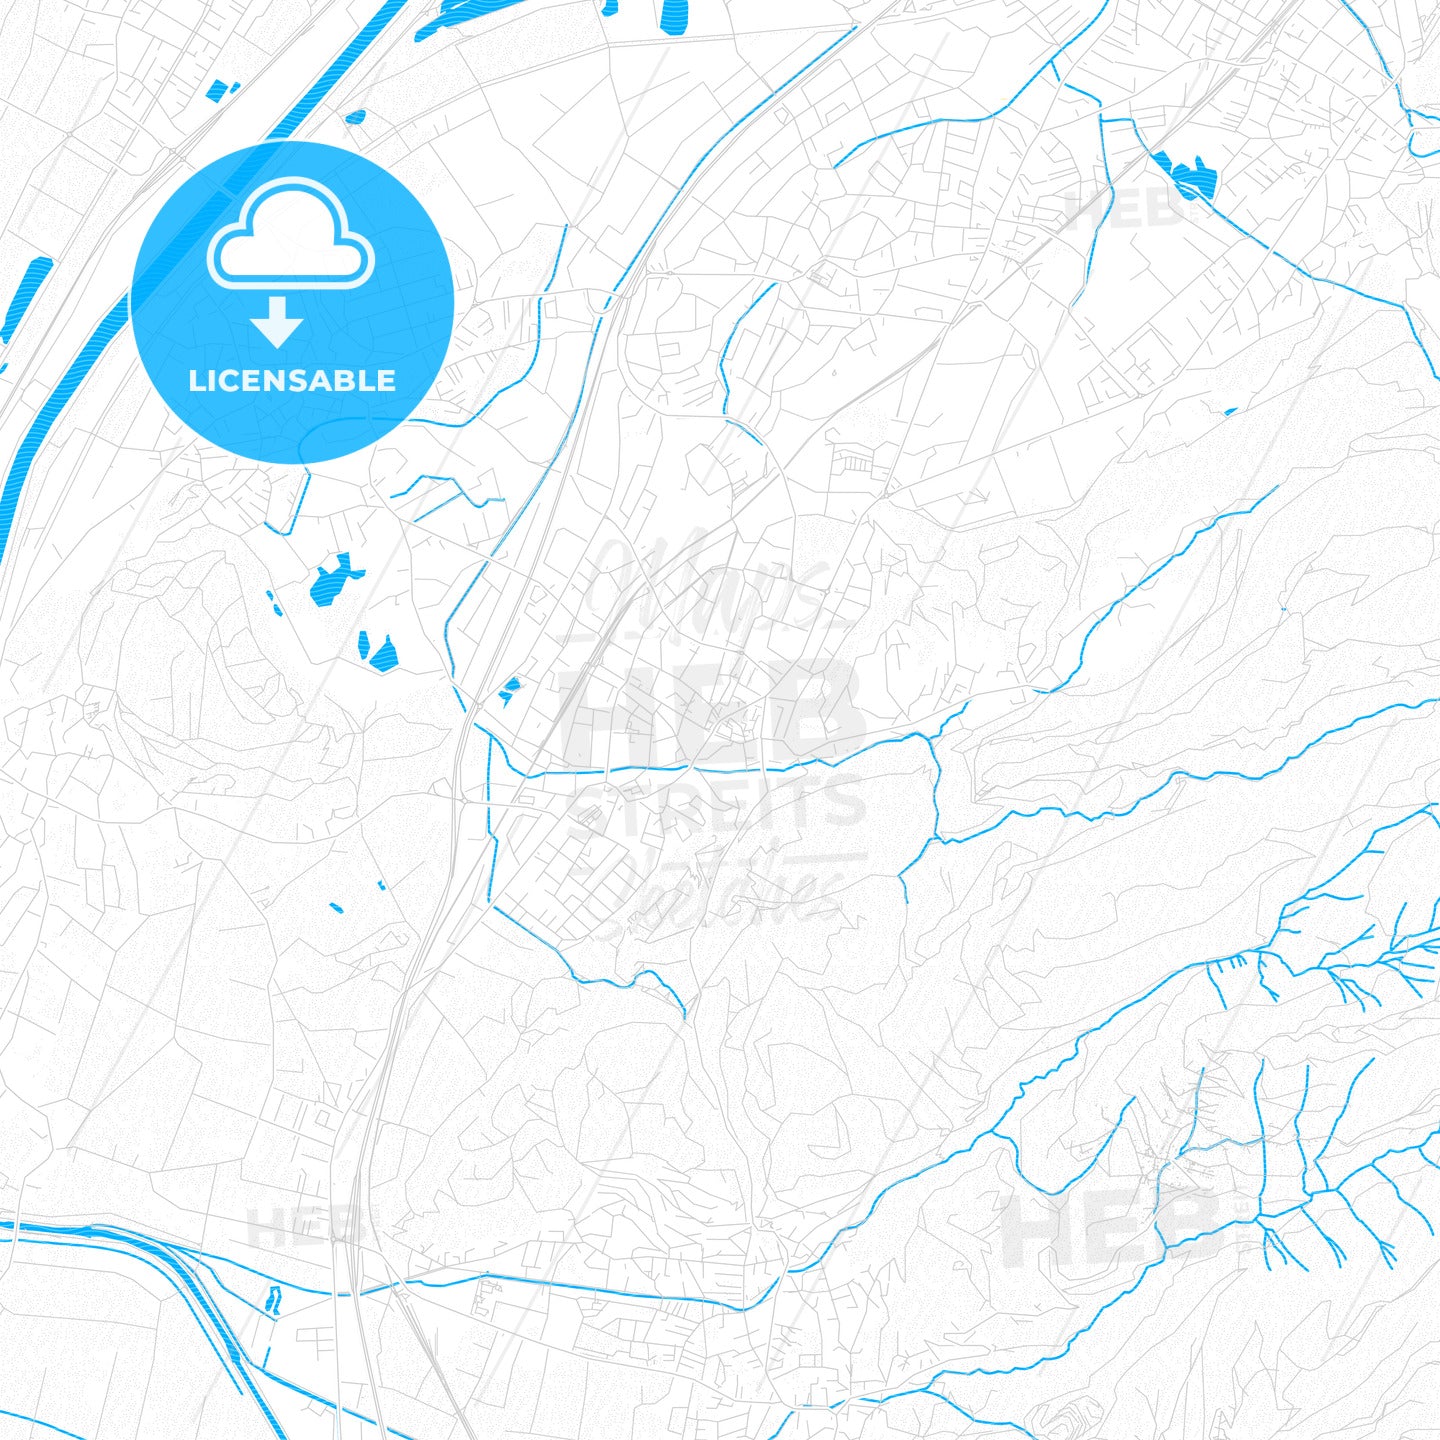 Götzis, Austria PDF vector map with water in focus